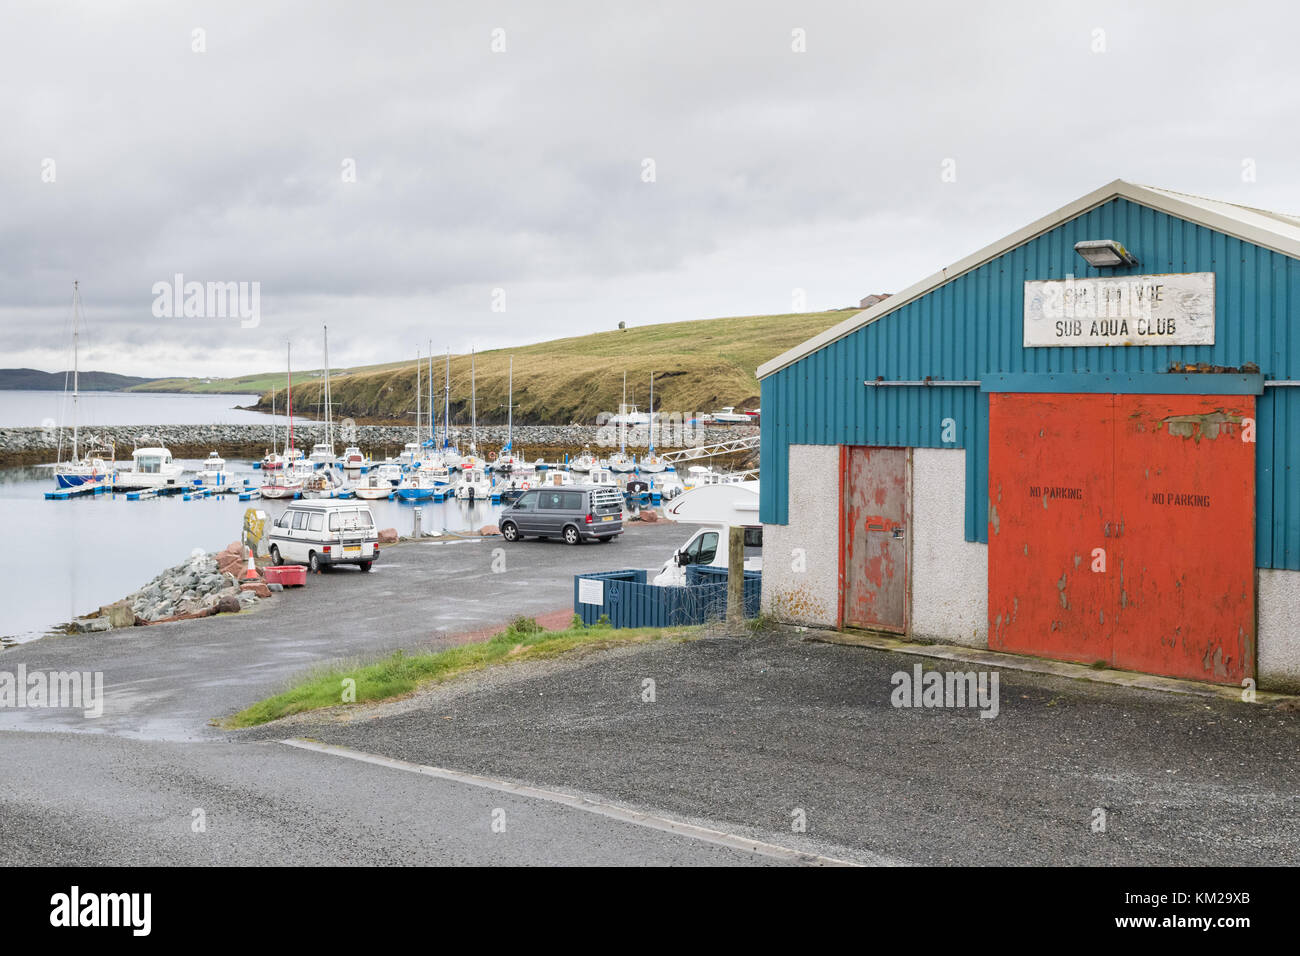 Delting Boating Club Marina et camping-car, Brae, Shetland, Écosse, Royaume-Uni Banque D'Images